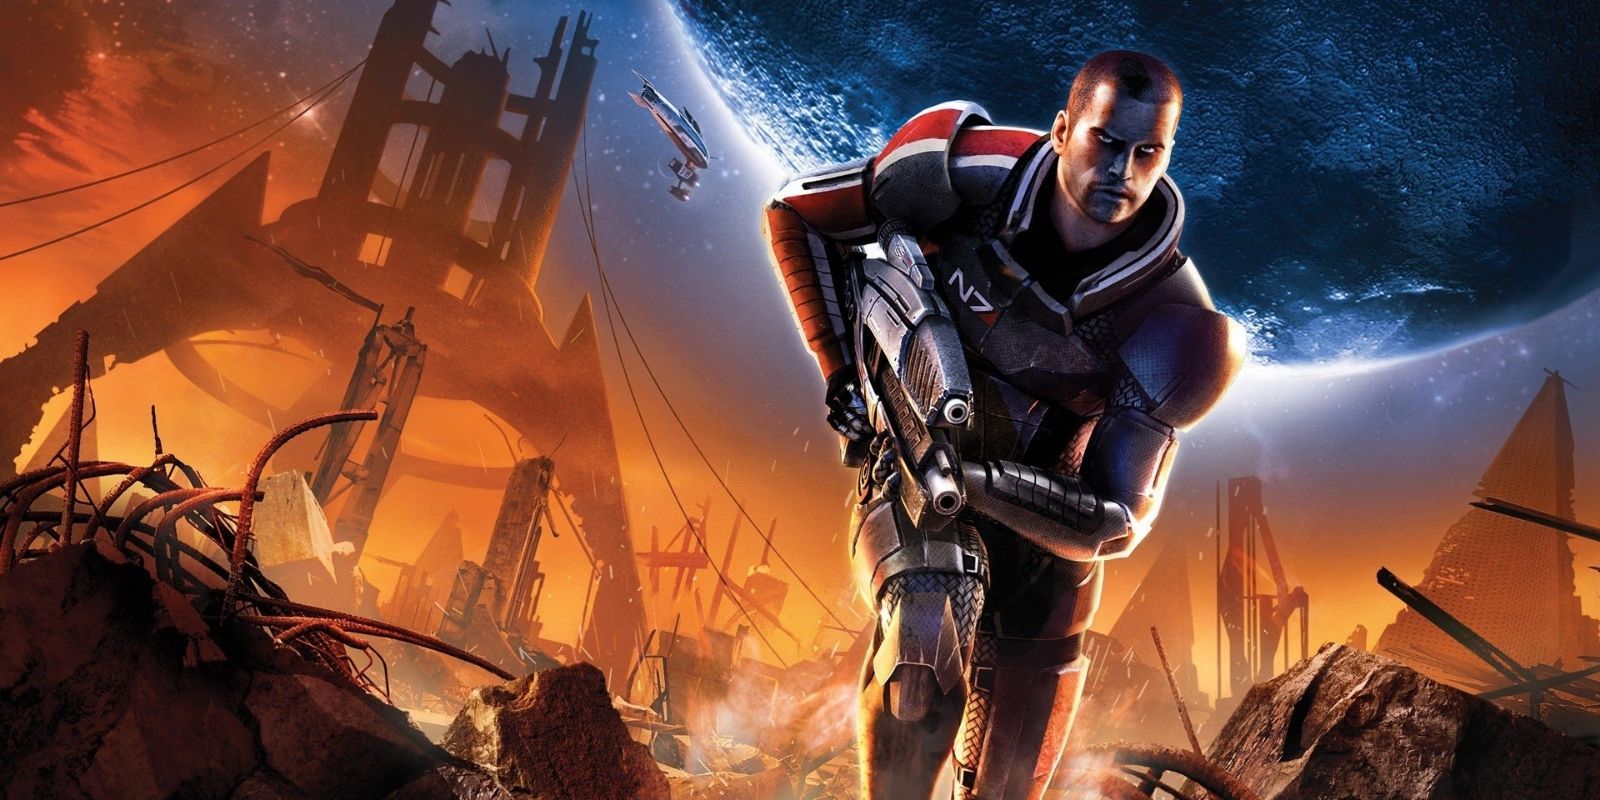 Mass Effect's Commander Shepard charging into battle